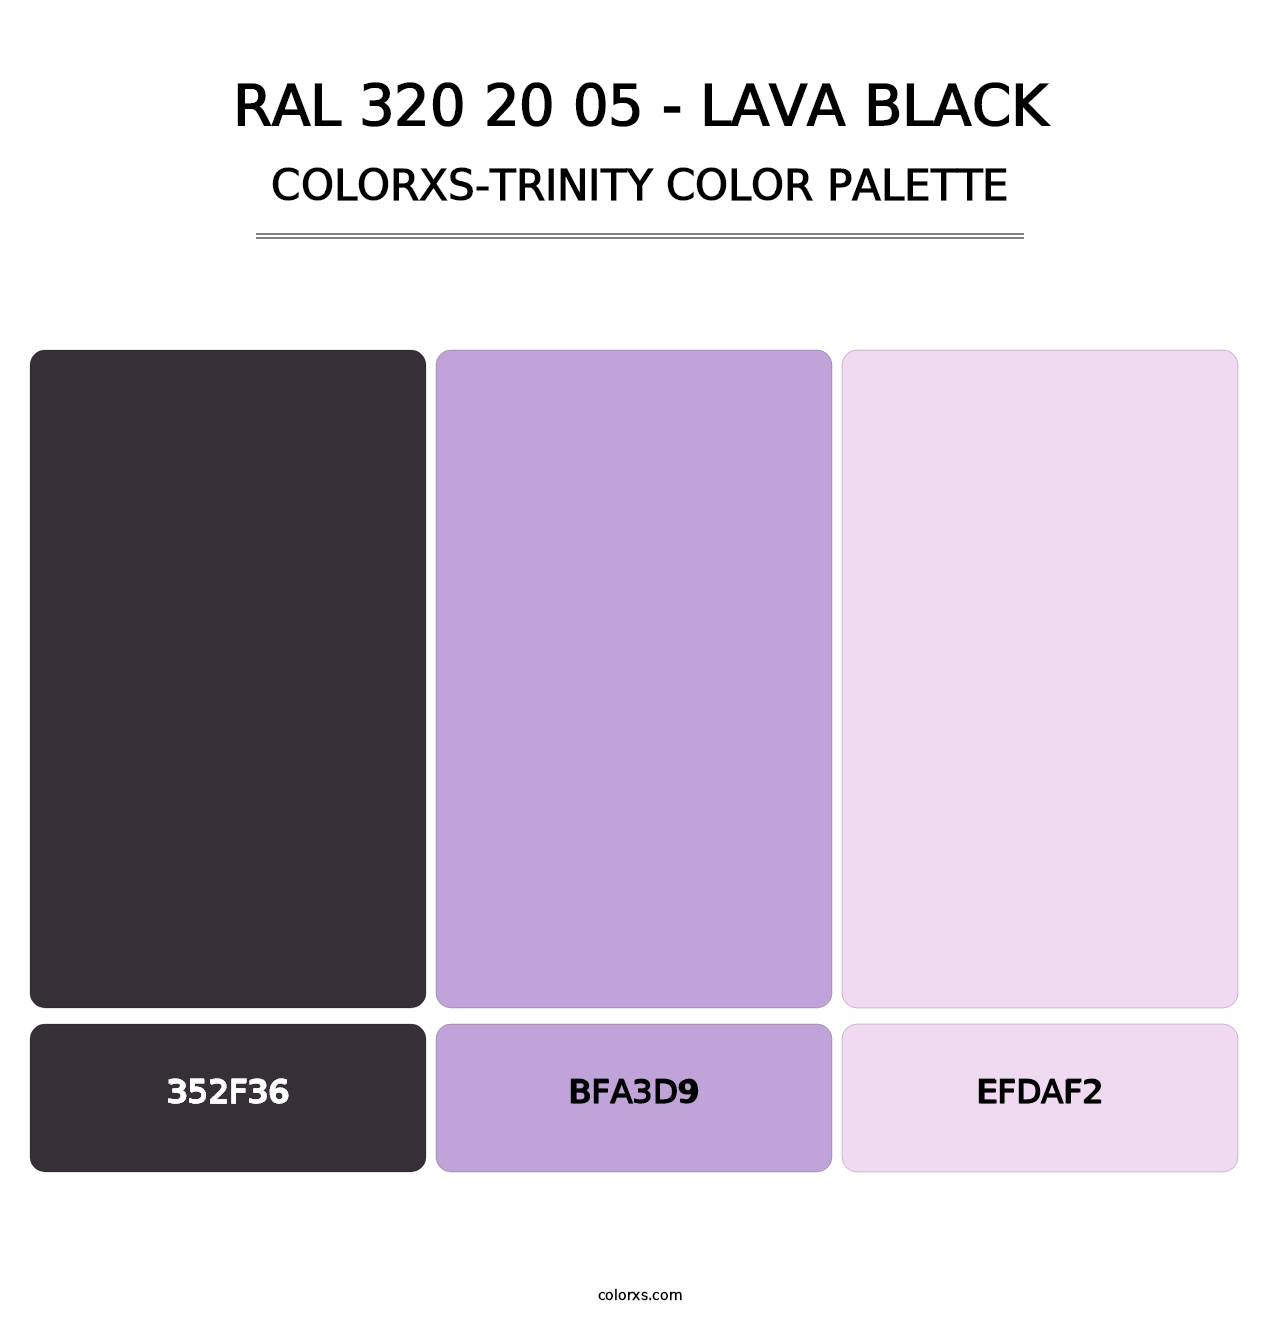 RAL 320 20 05 - Lava Black - Colorxs Trinity Palette